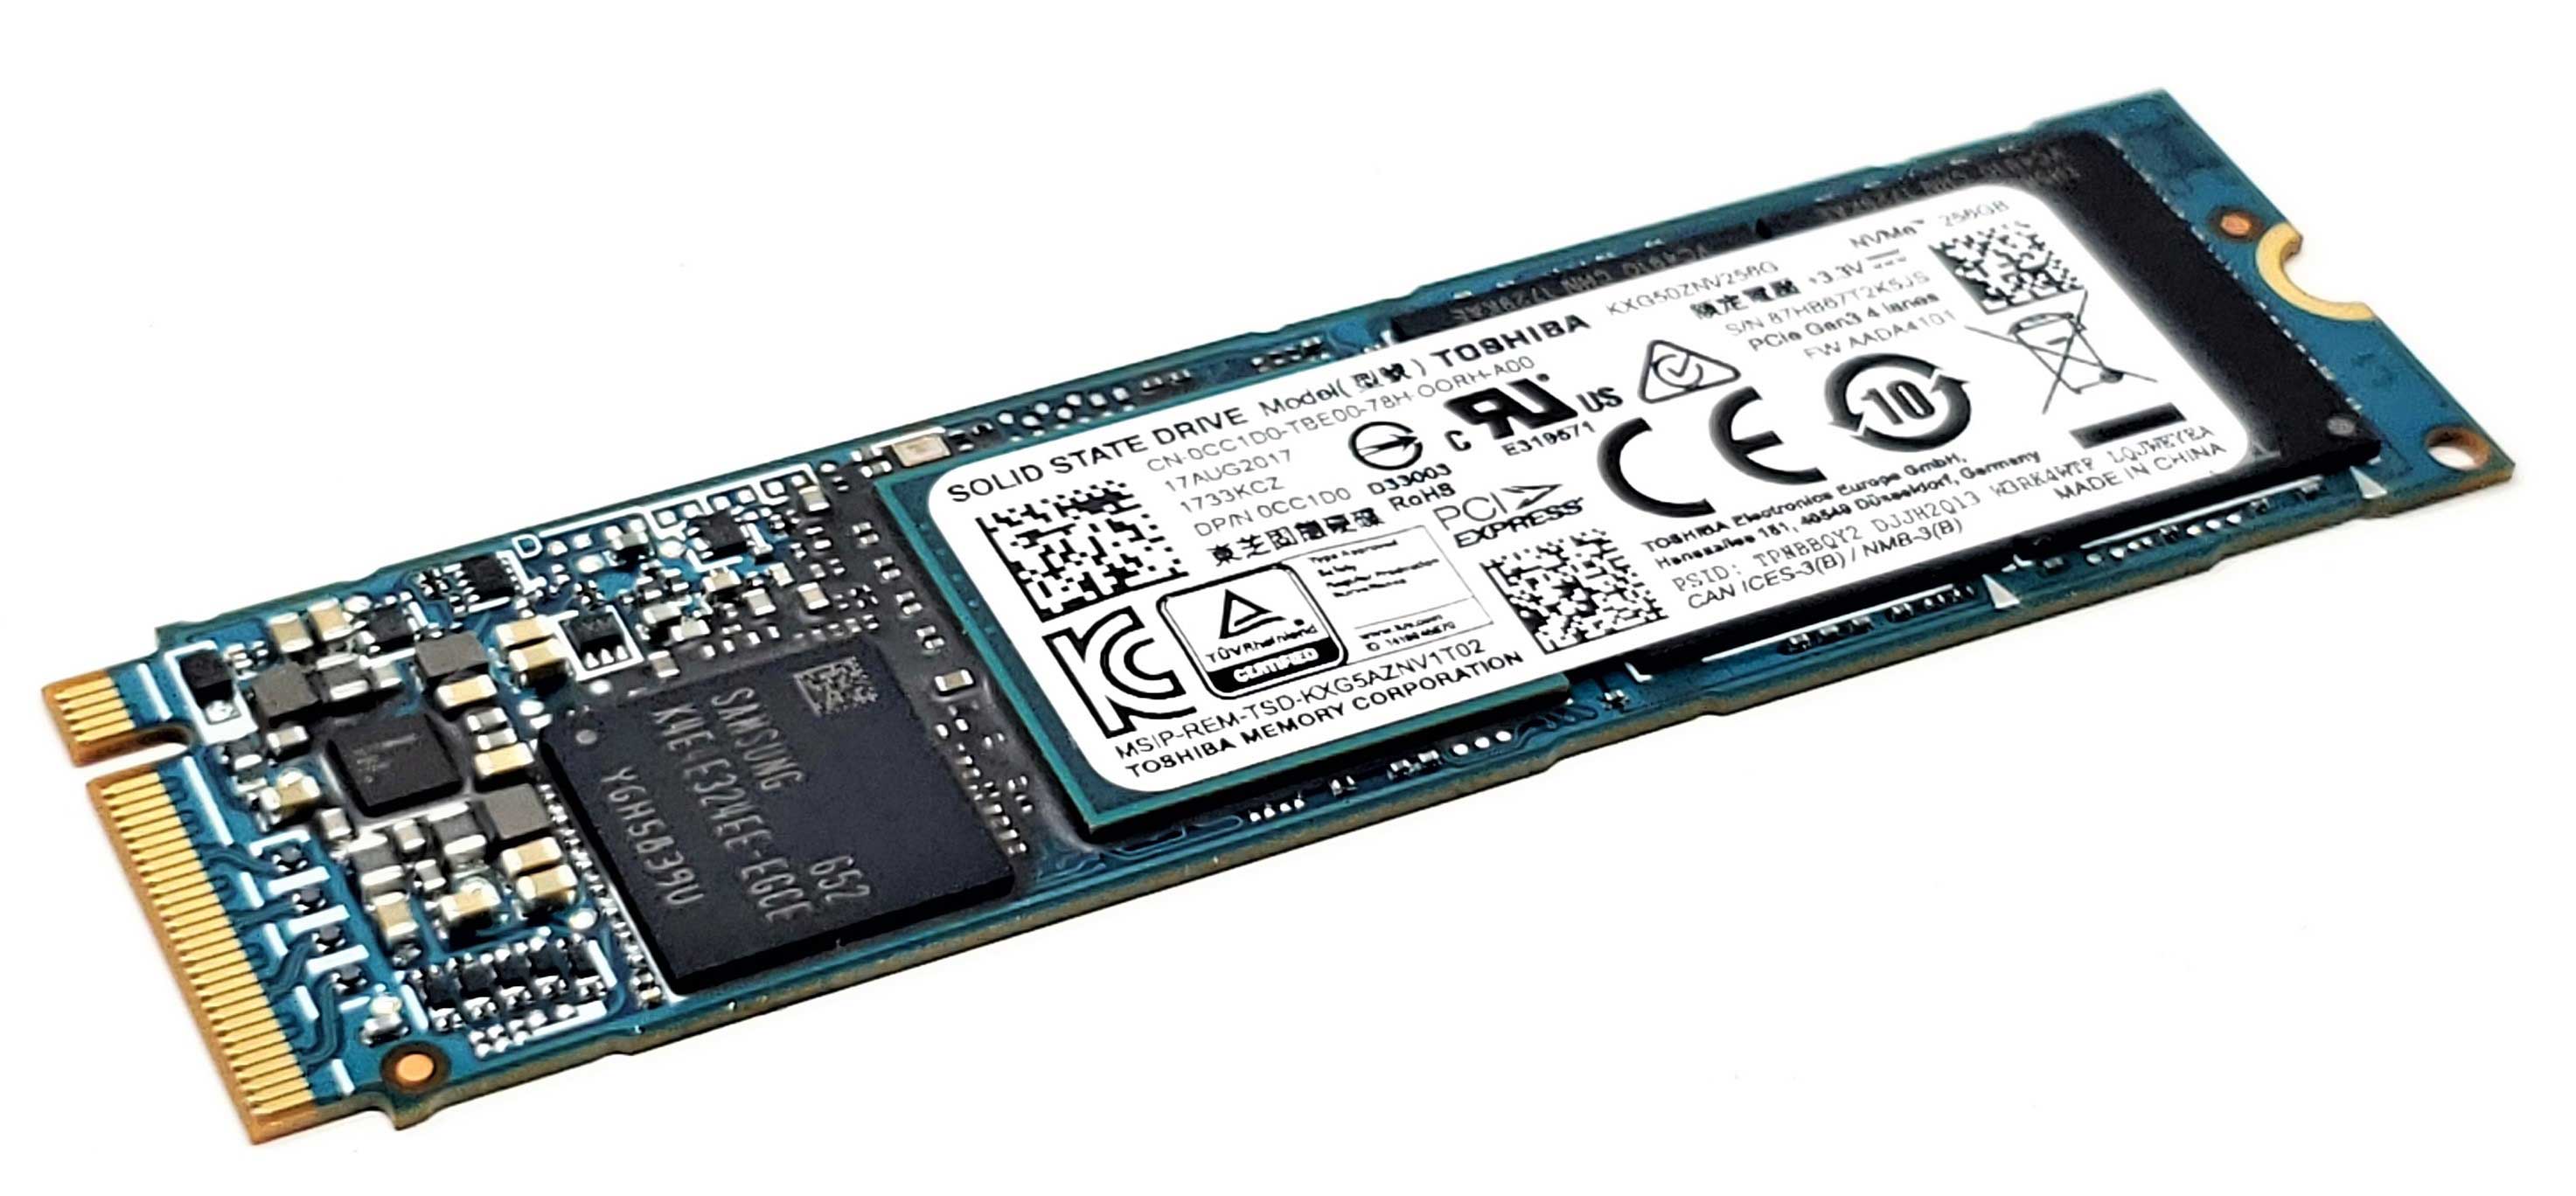 Intel SSDPEKKW256G8 - 256GB M.2 PCIe NVMe 2280 MLC 3D-Nand SSD Solid State